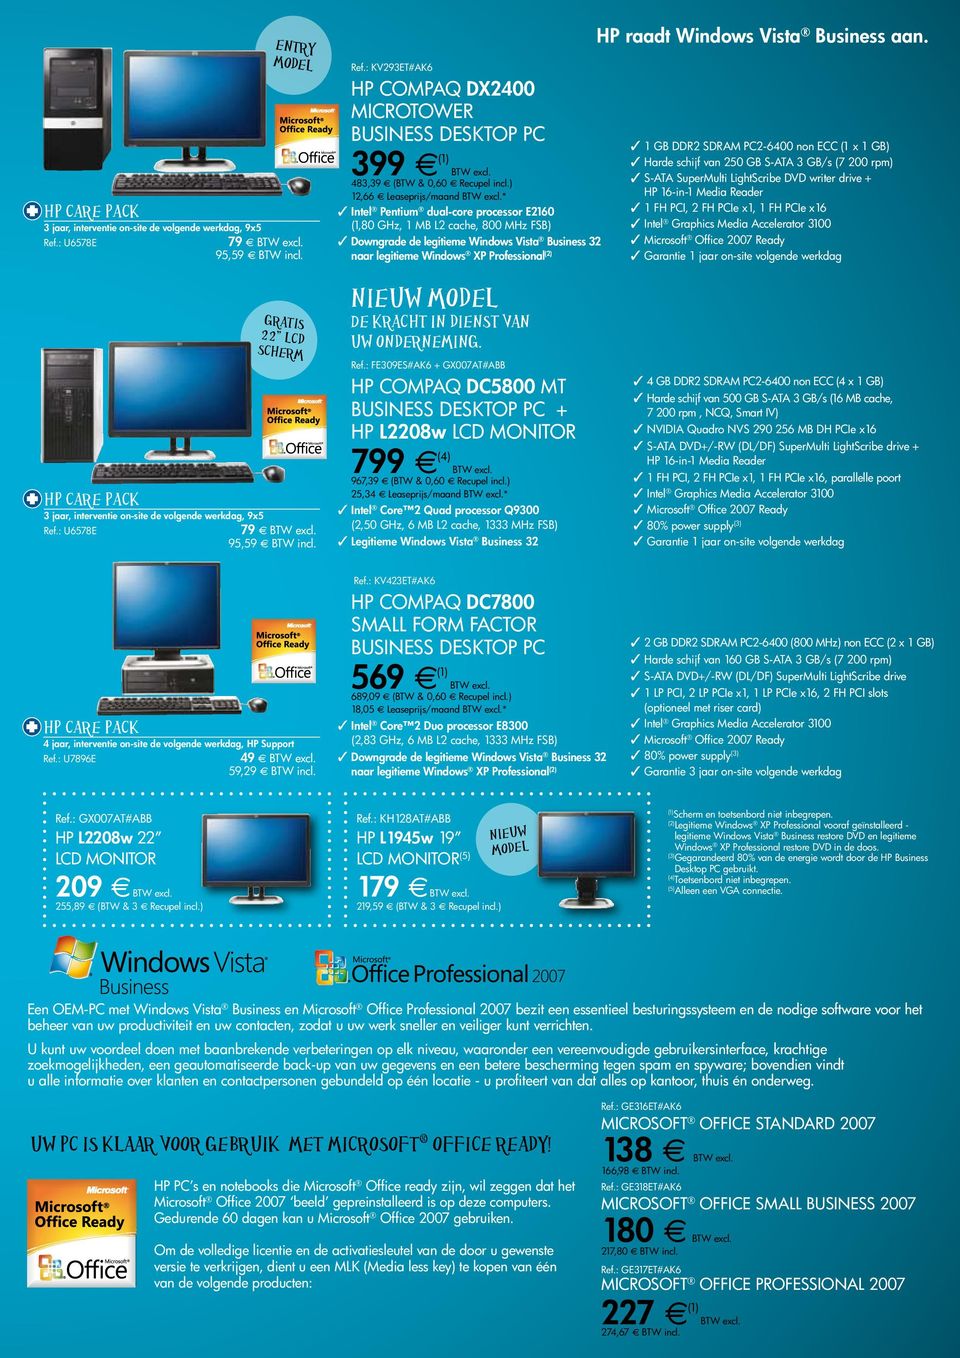 * Intel Pentium dual-core processor E2160 (1,80 GHz, 1 MB L2 cache, 800 MHz FSB) Downgrade de legitieme Windows Vista Business 32 naar legitieme Windows XP Professional (2) nieuw model De kracht in